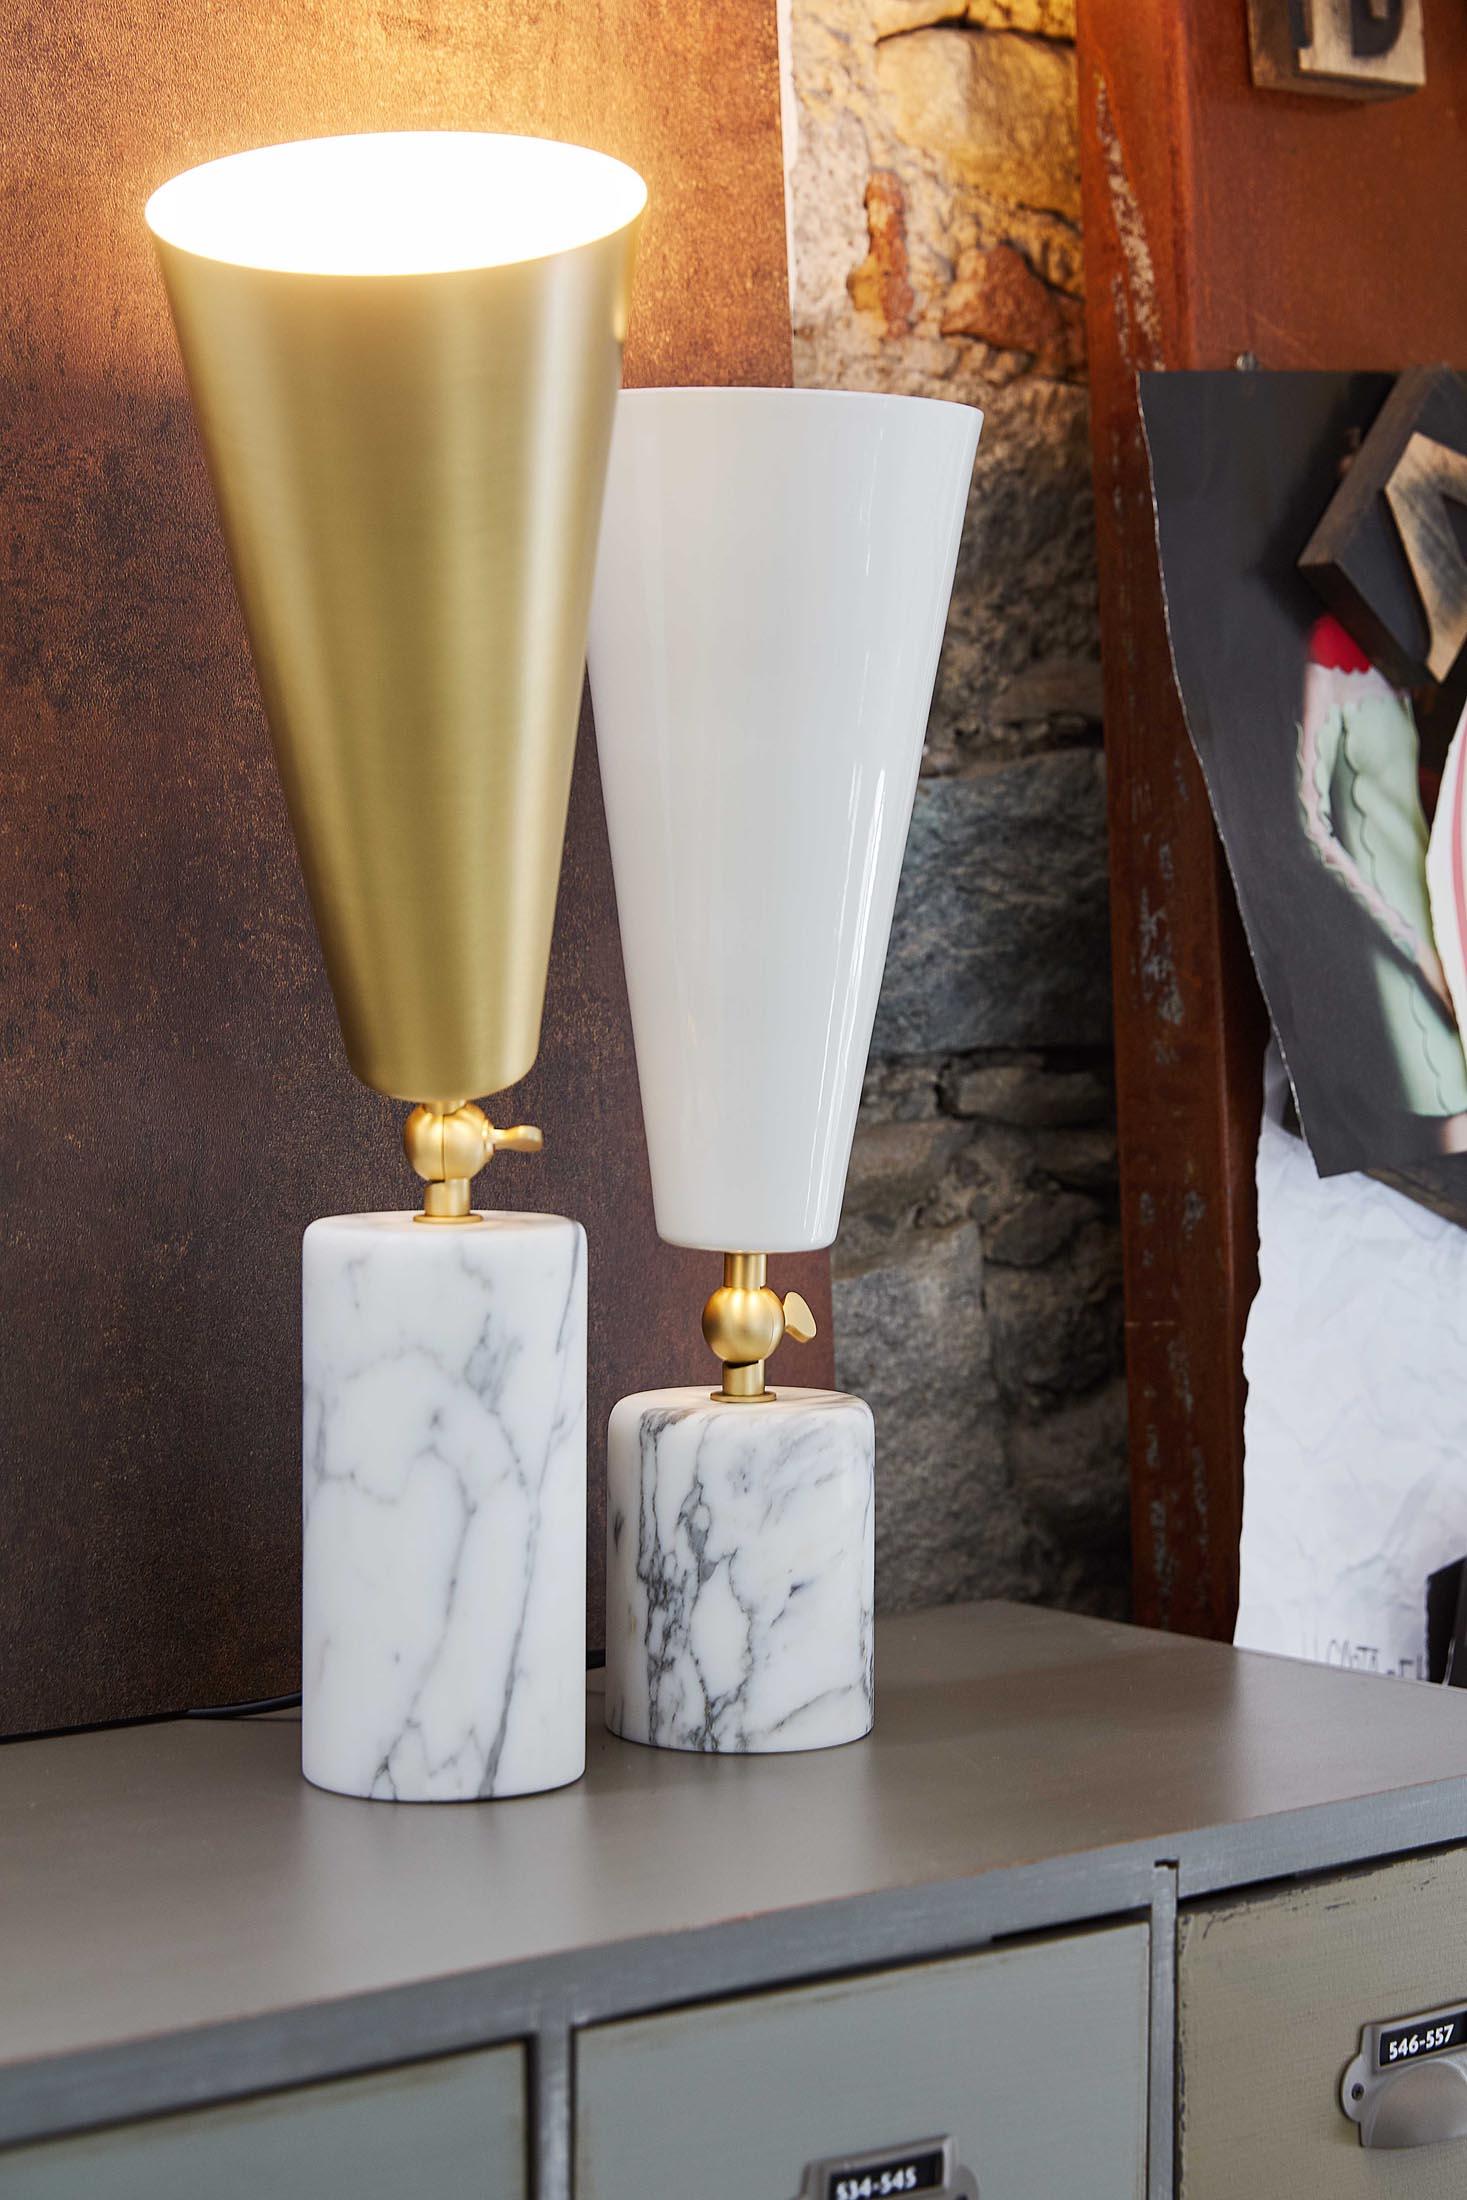 Tato Italia 'Vox' Table Lamp in White Carrara Marble, Chrome, and Glossy Black For Sale 1